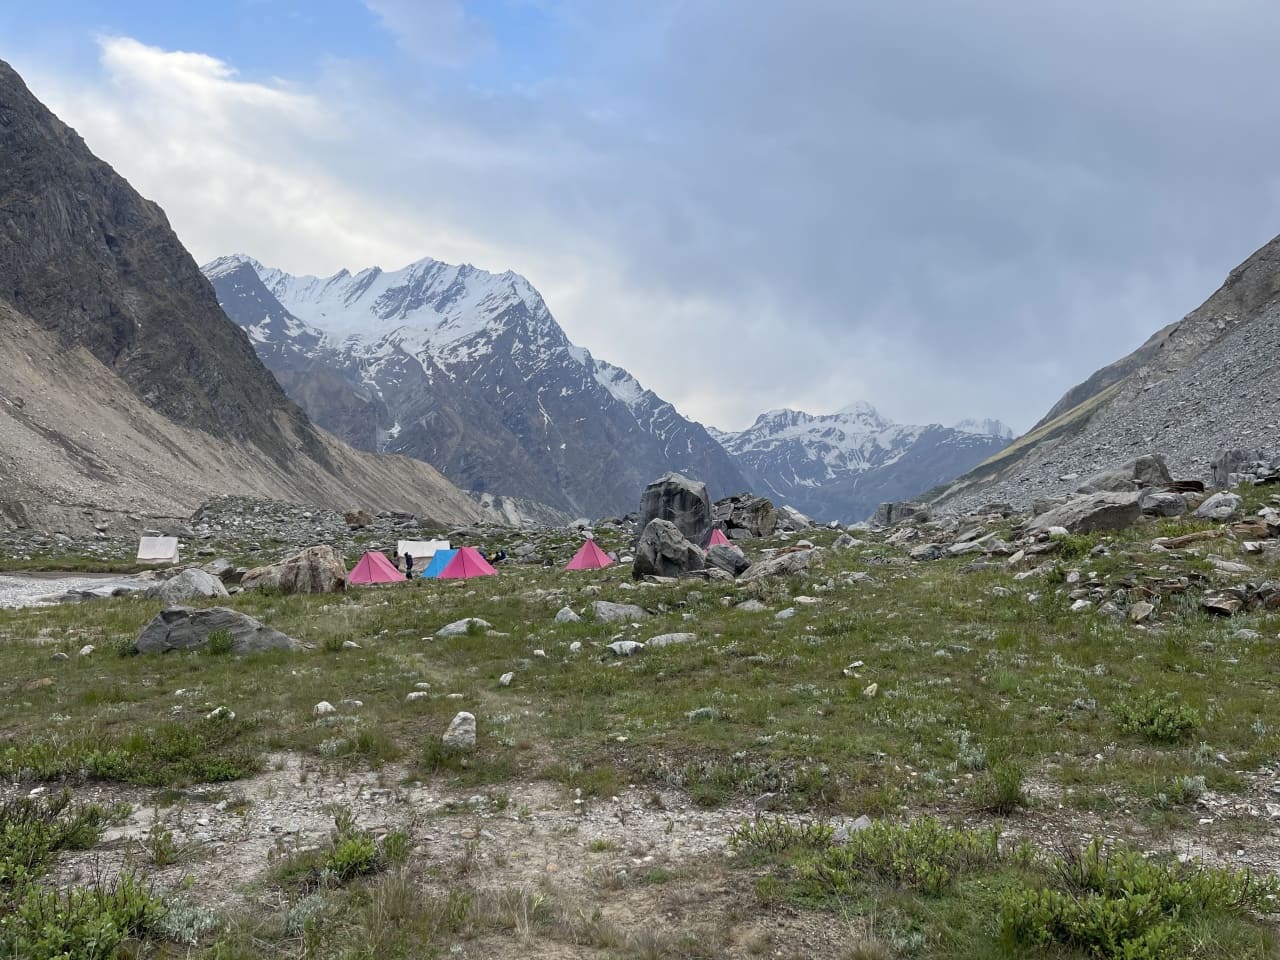 Khatling zero point camp site